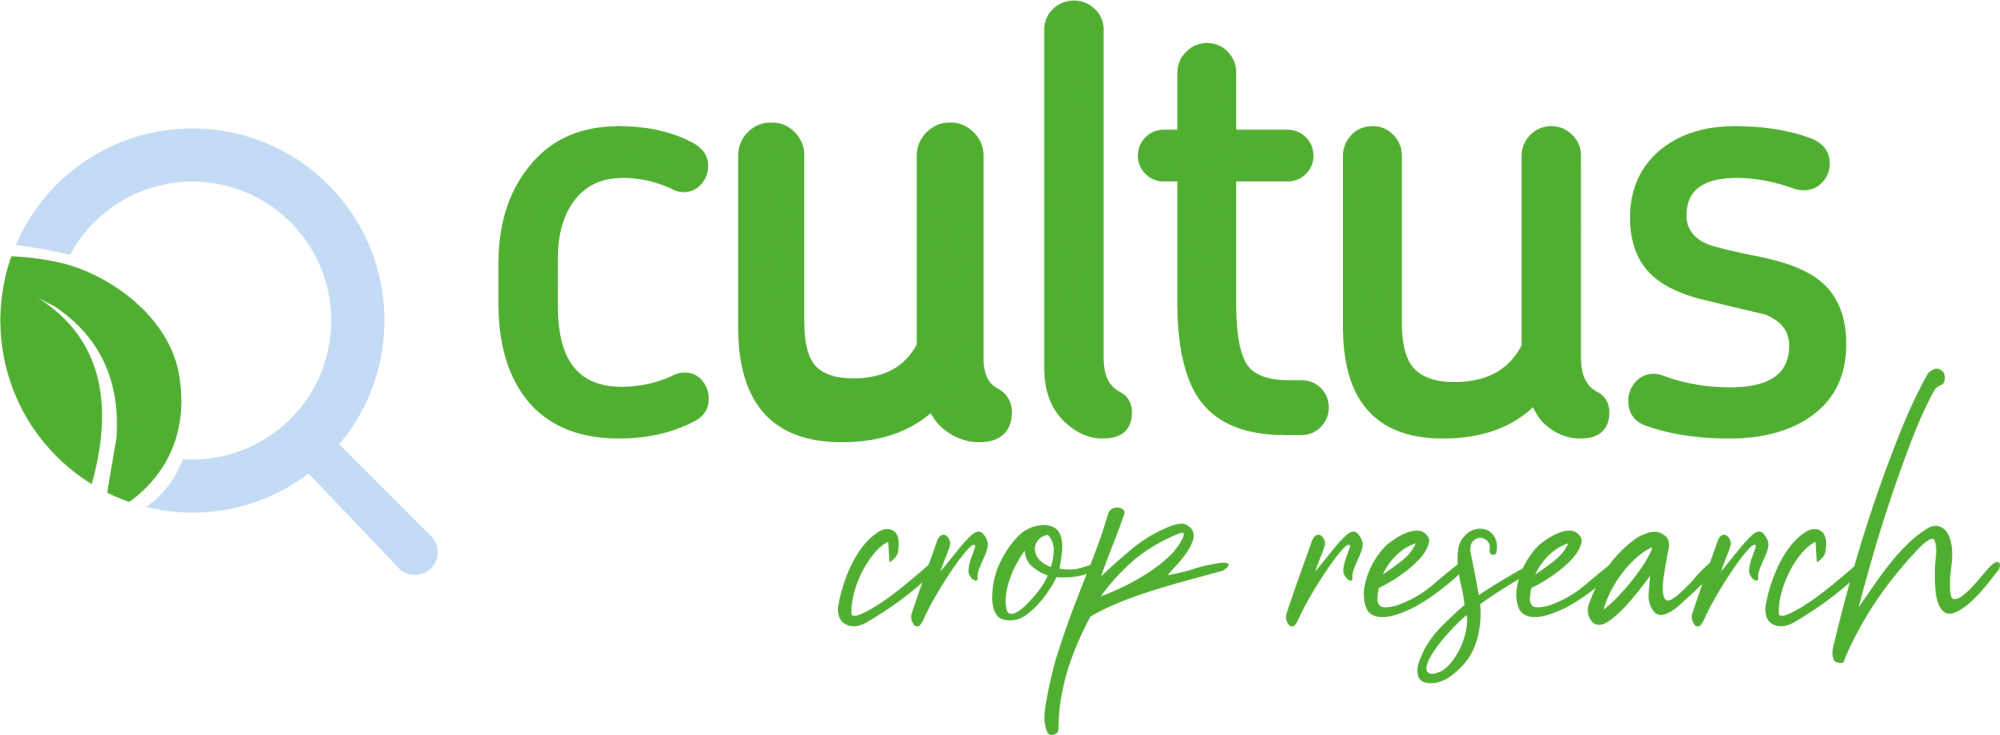 Cultus crop research